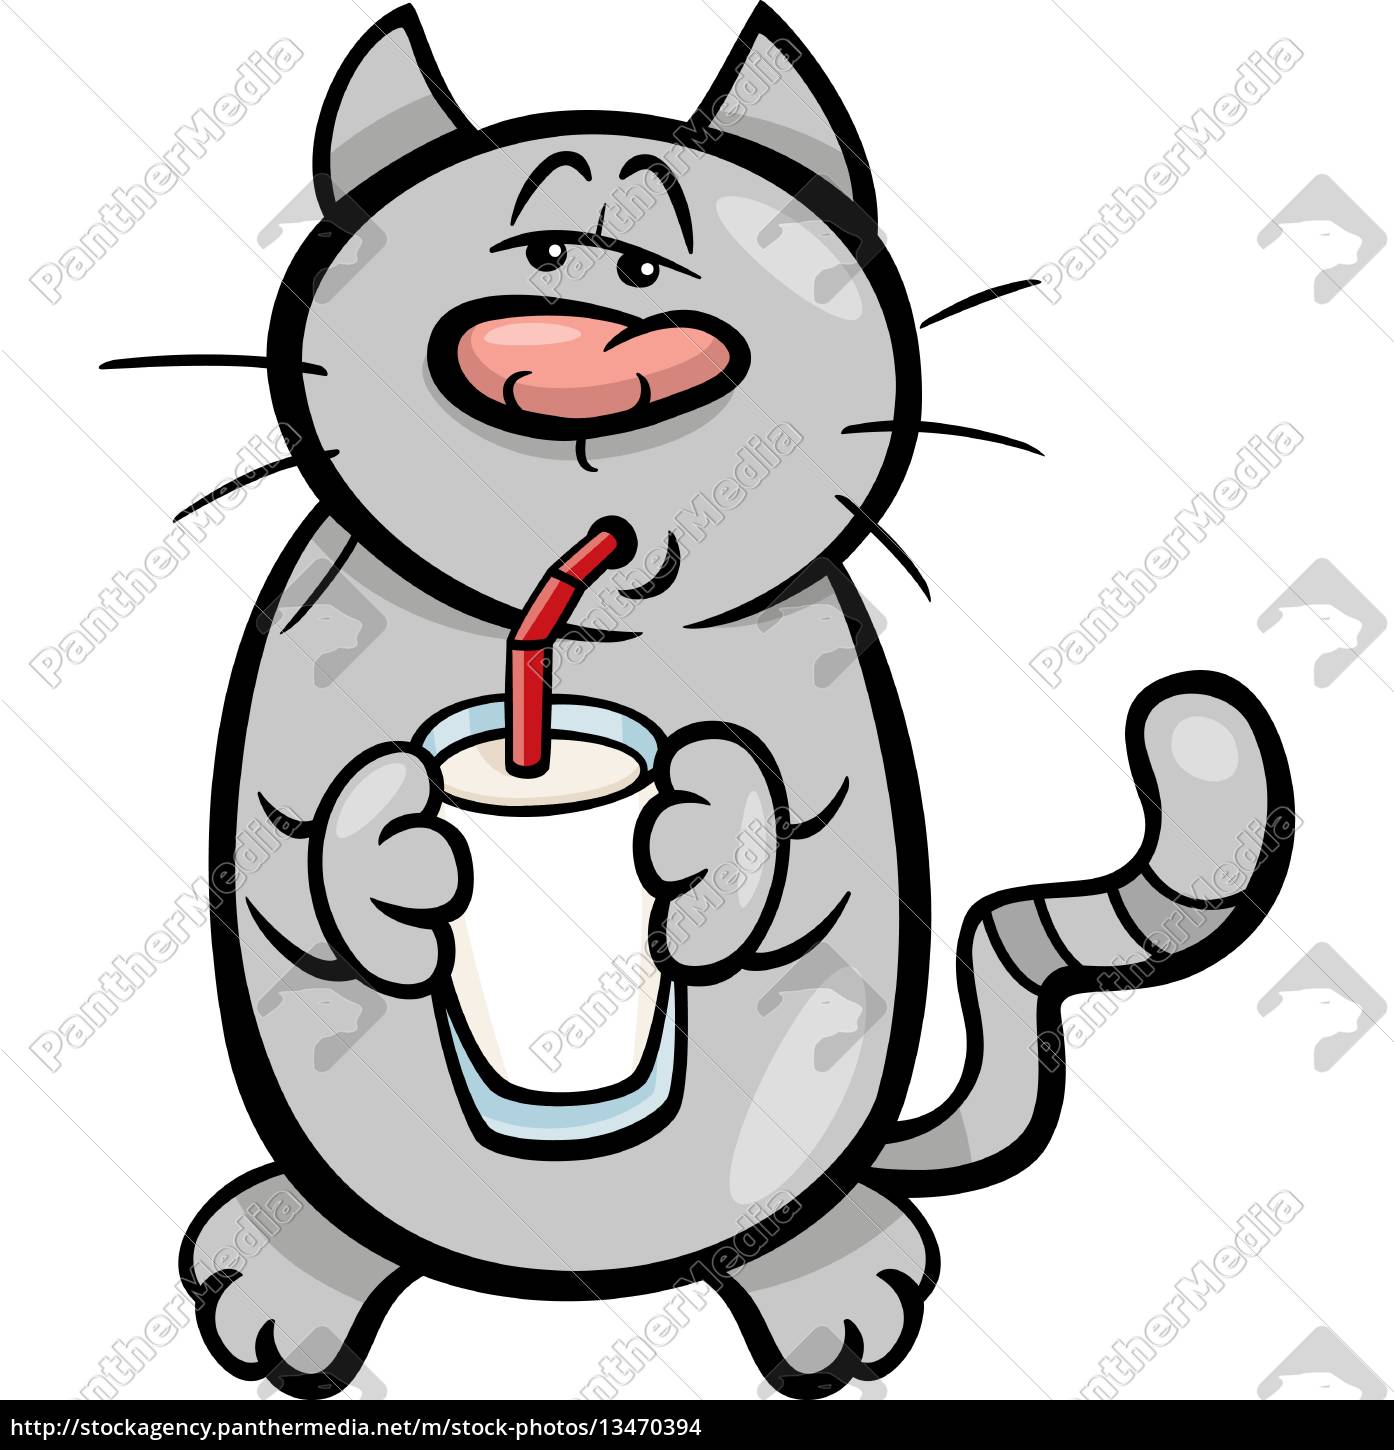 cat drink milk cartoon illustration - Stock image - #13470394